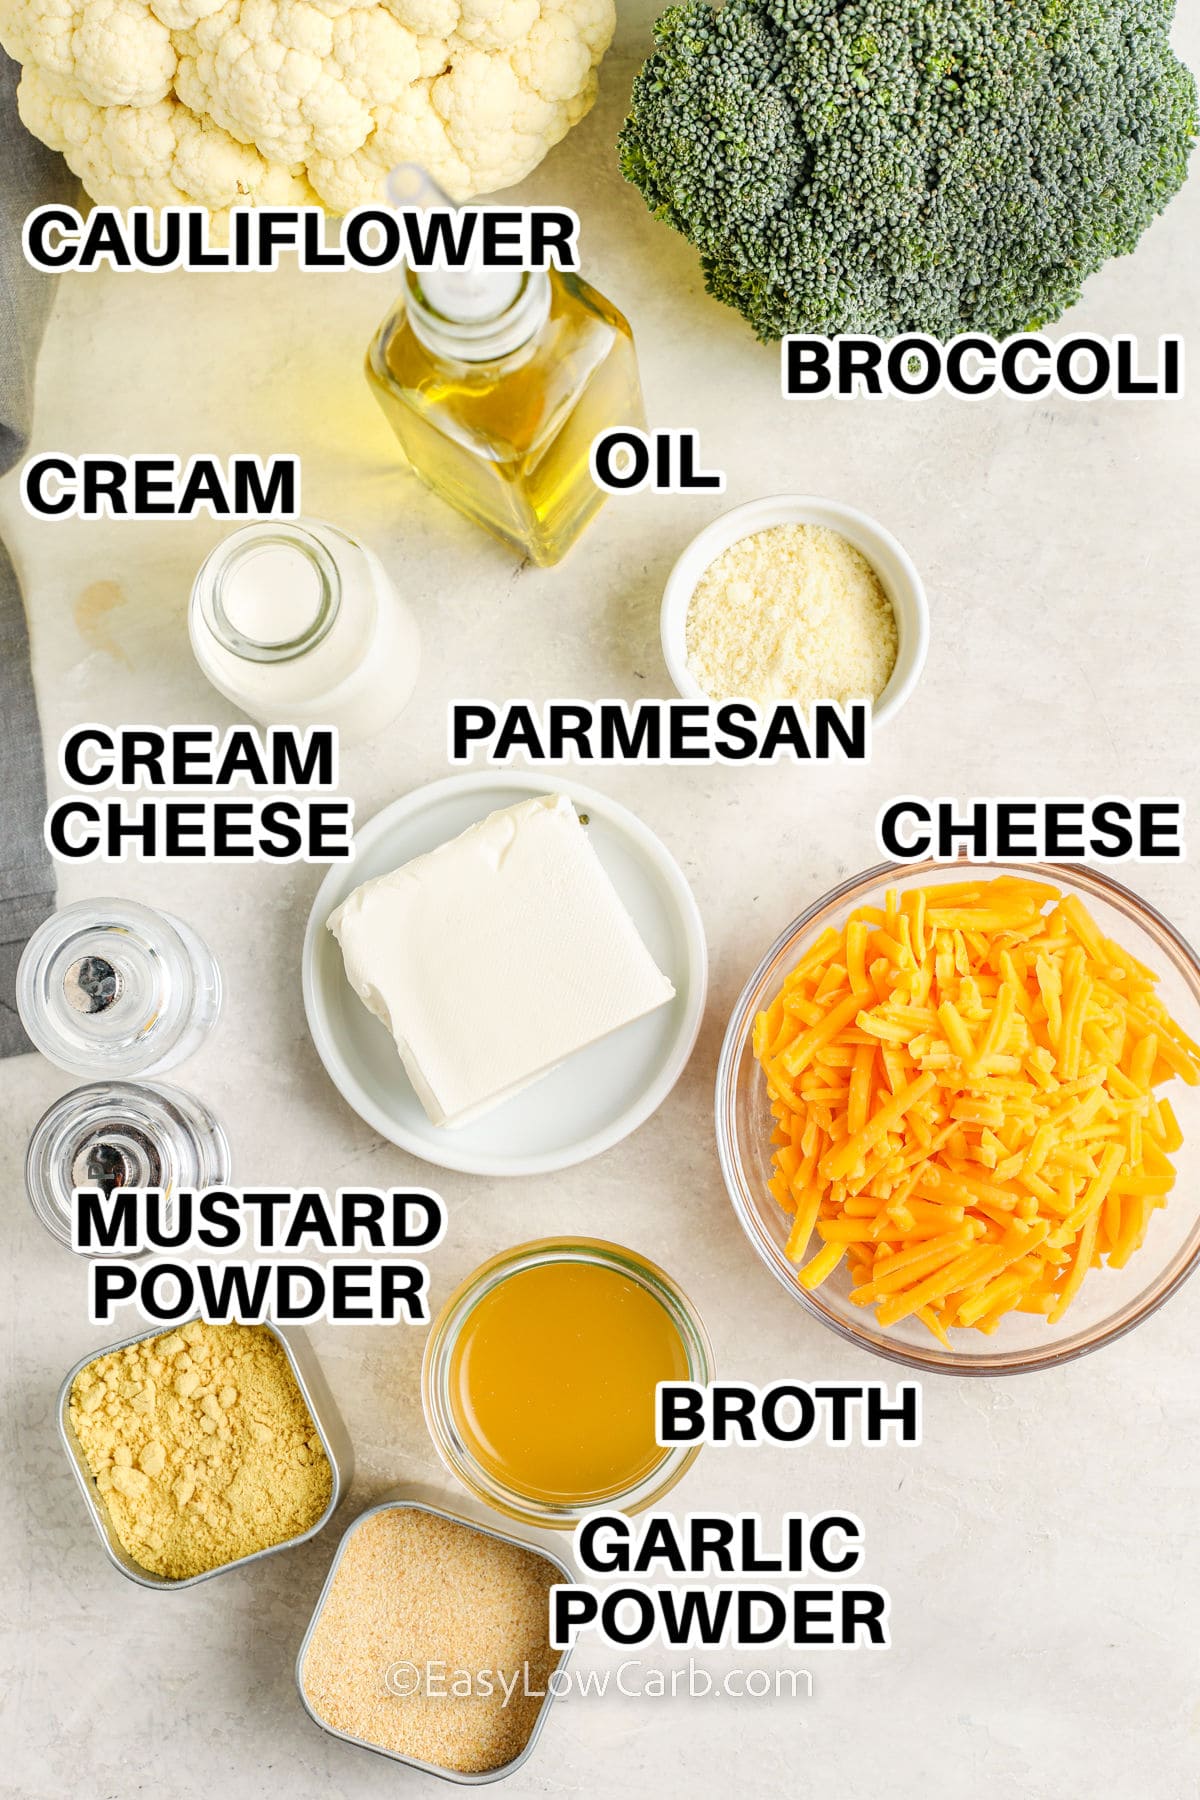 ingredients to make broccoli cauliflower casserole labeled: cauliflower, broccoli, oil, cream, cream cheese, parmesan, cheese, mustard powder, broth, and garlic powder.